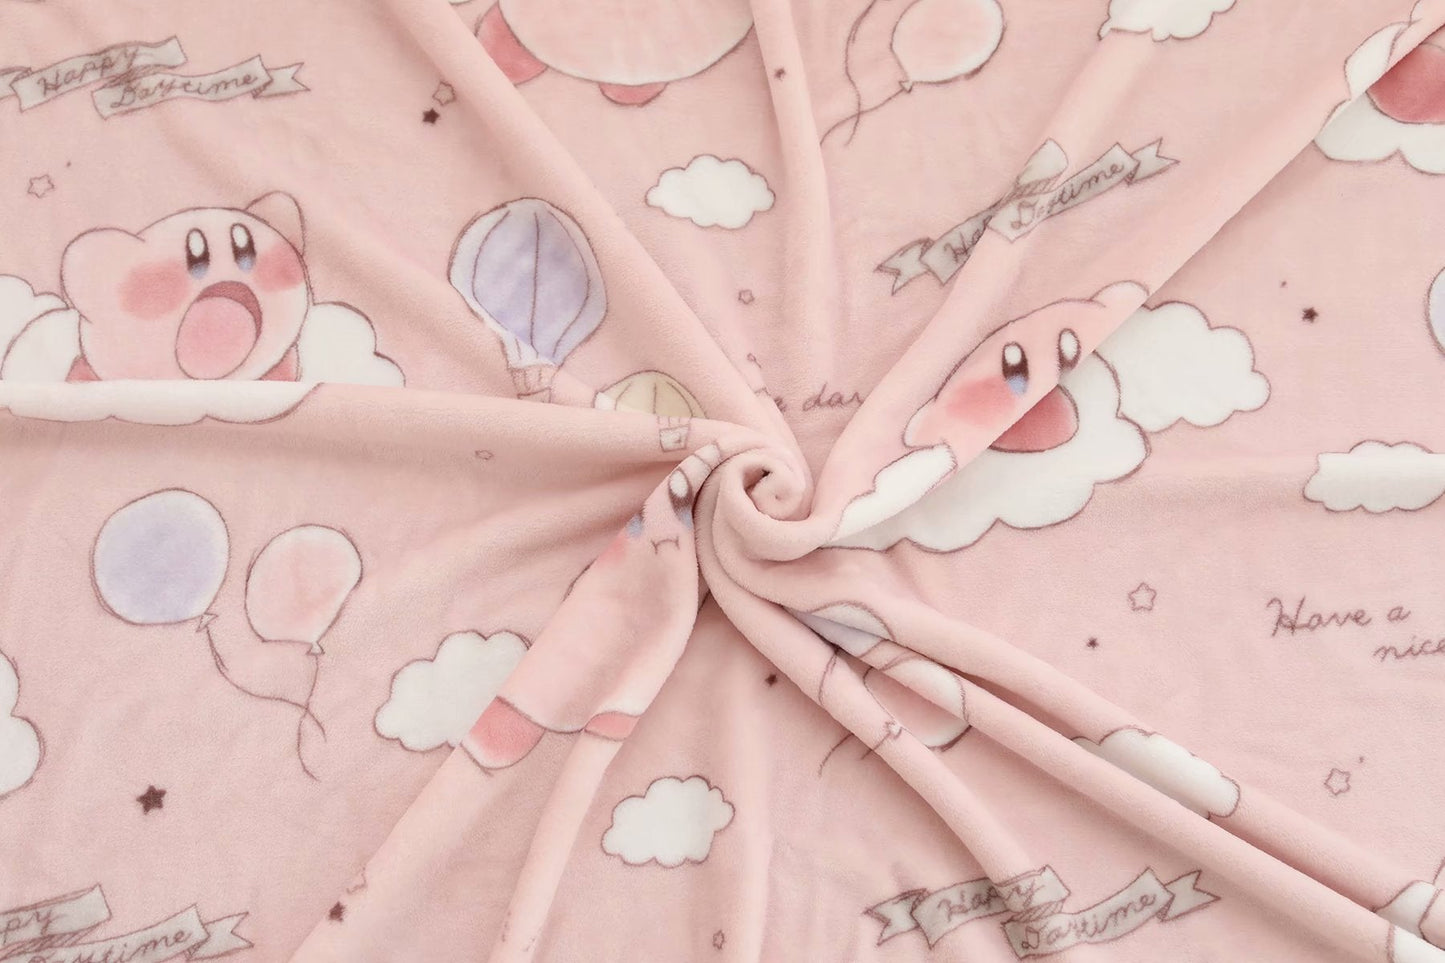 Kawaii Pink Mochi Anime Blanket